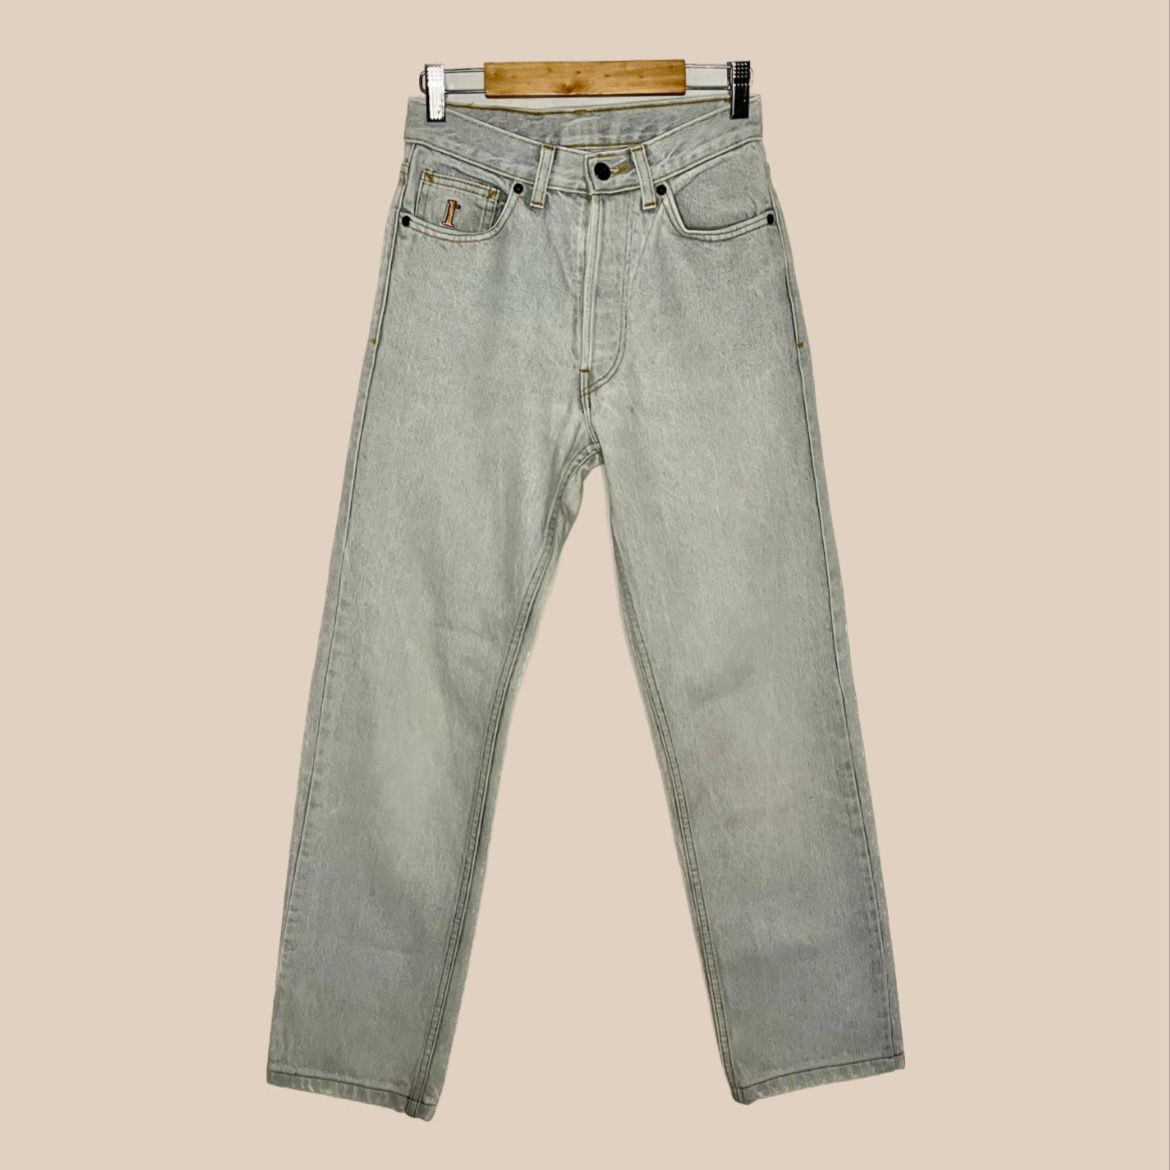 Vintage gray jeans